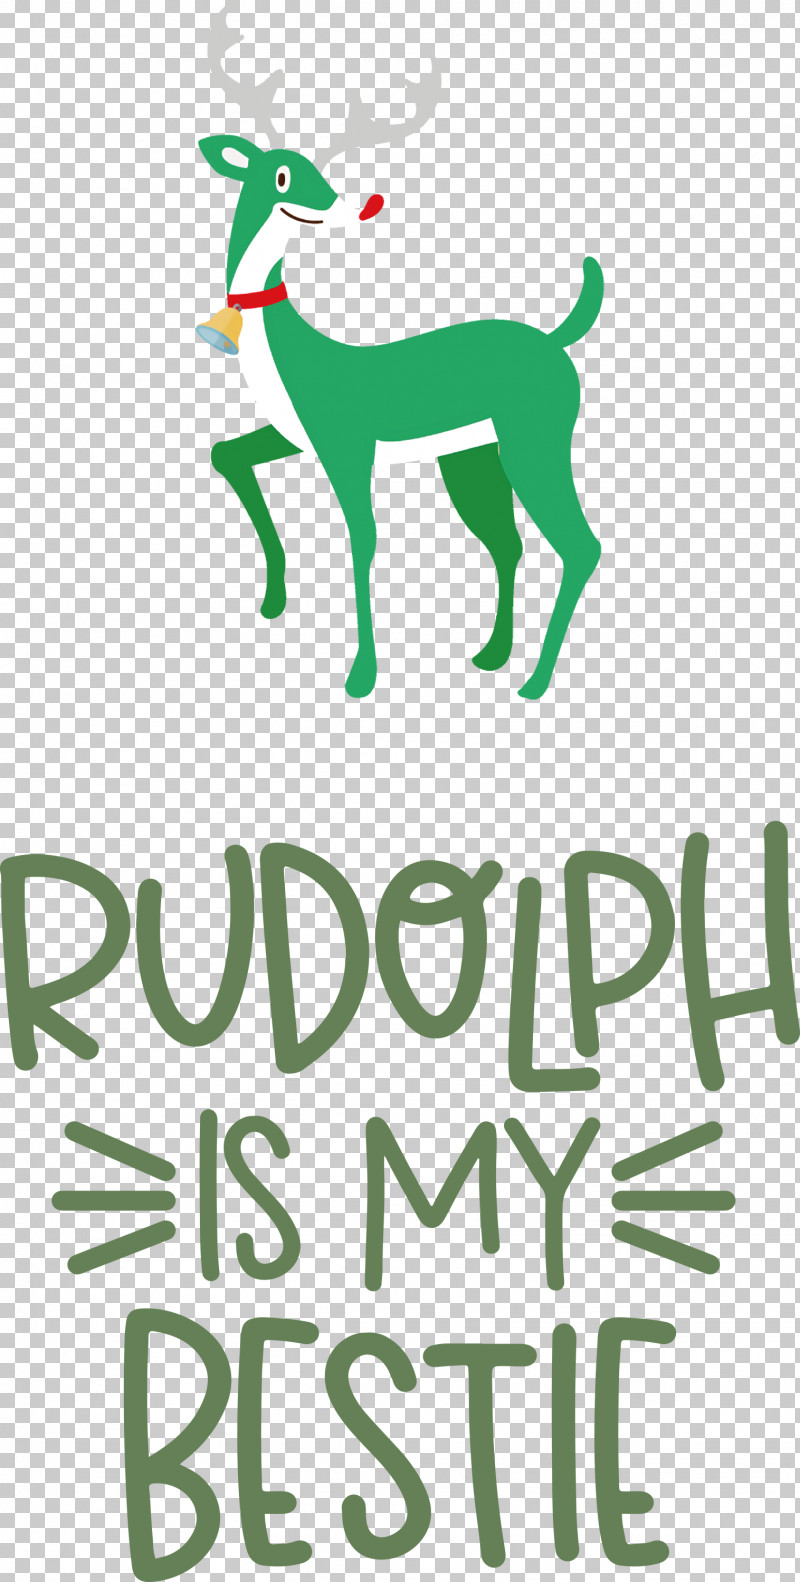 Rudolph Is My Bestie Rudolph Deer PNG, Clipart, Christmas, Deer, Green, Line Art, Logo Free PNG Download